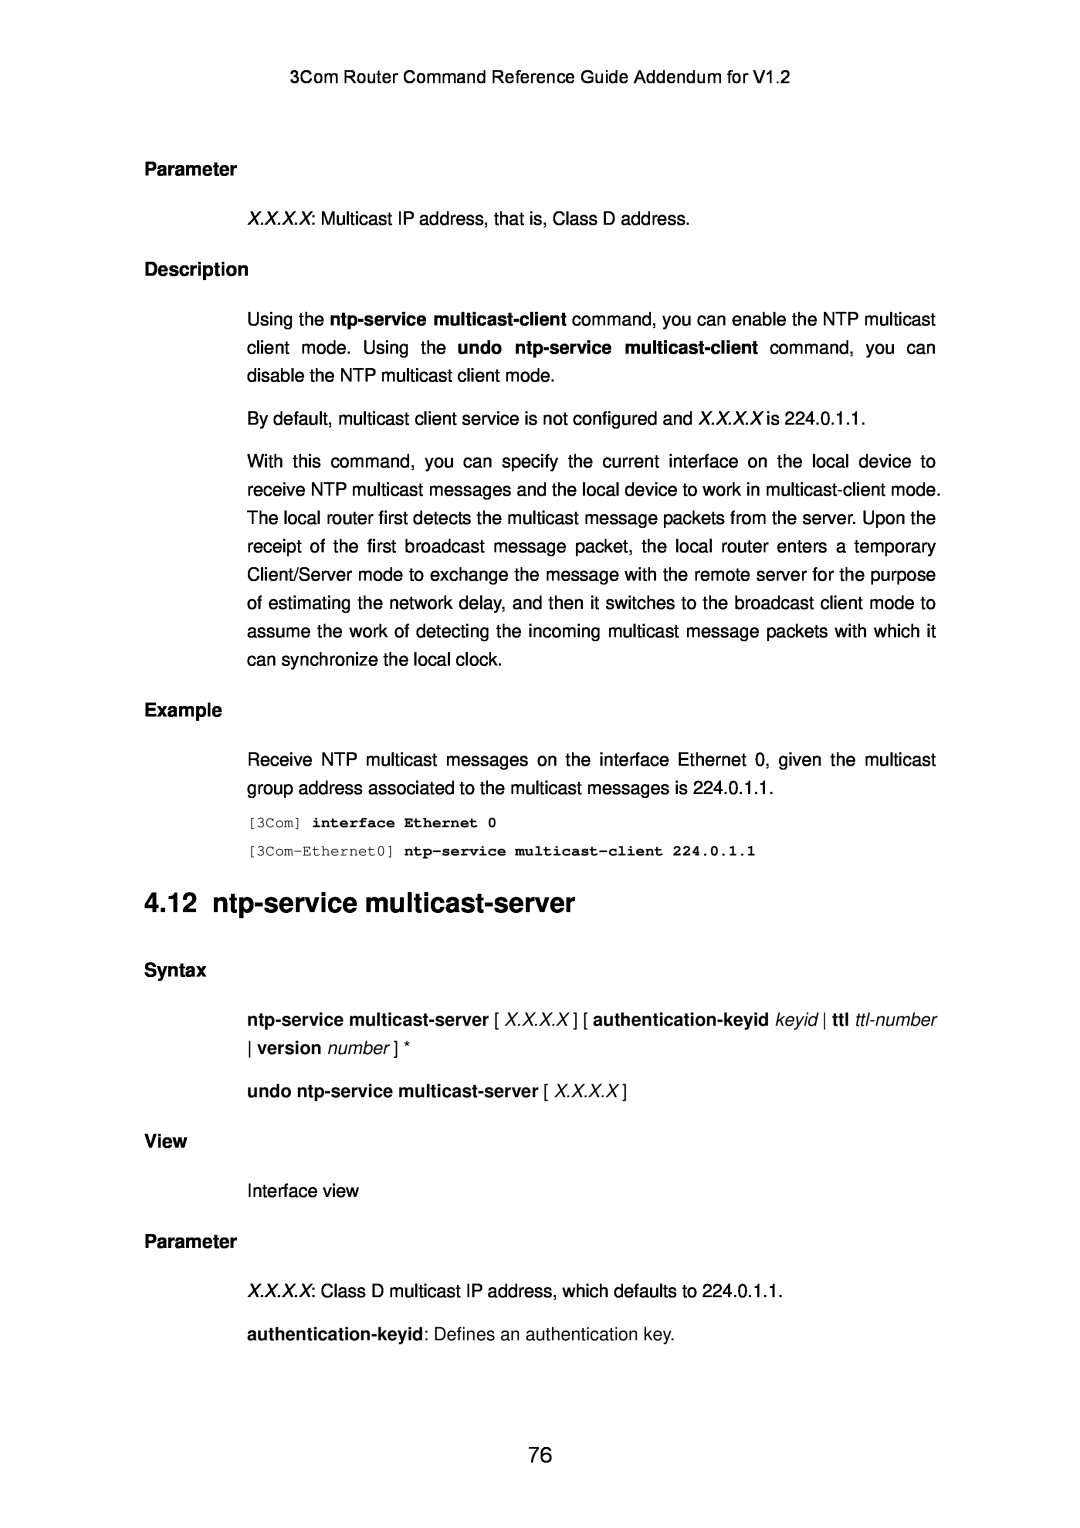 3Com 10014302 manual ntp-service multicast-server, Parameter, Description, Example, Syntax, View 